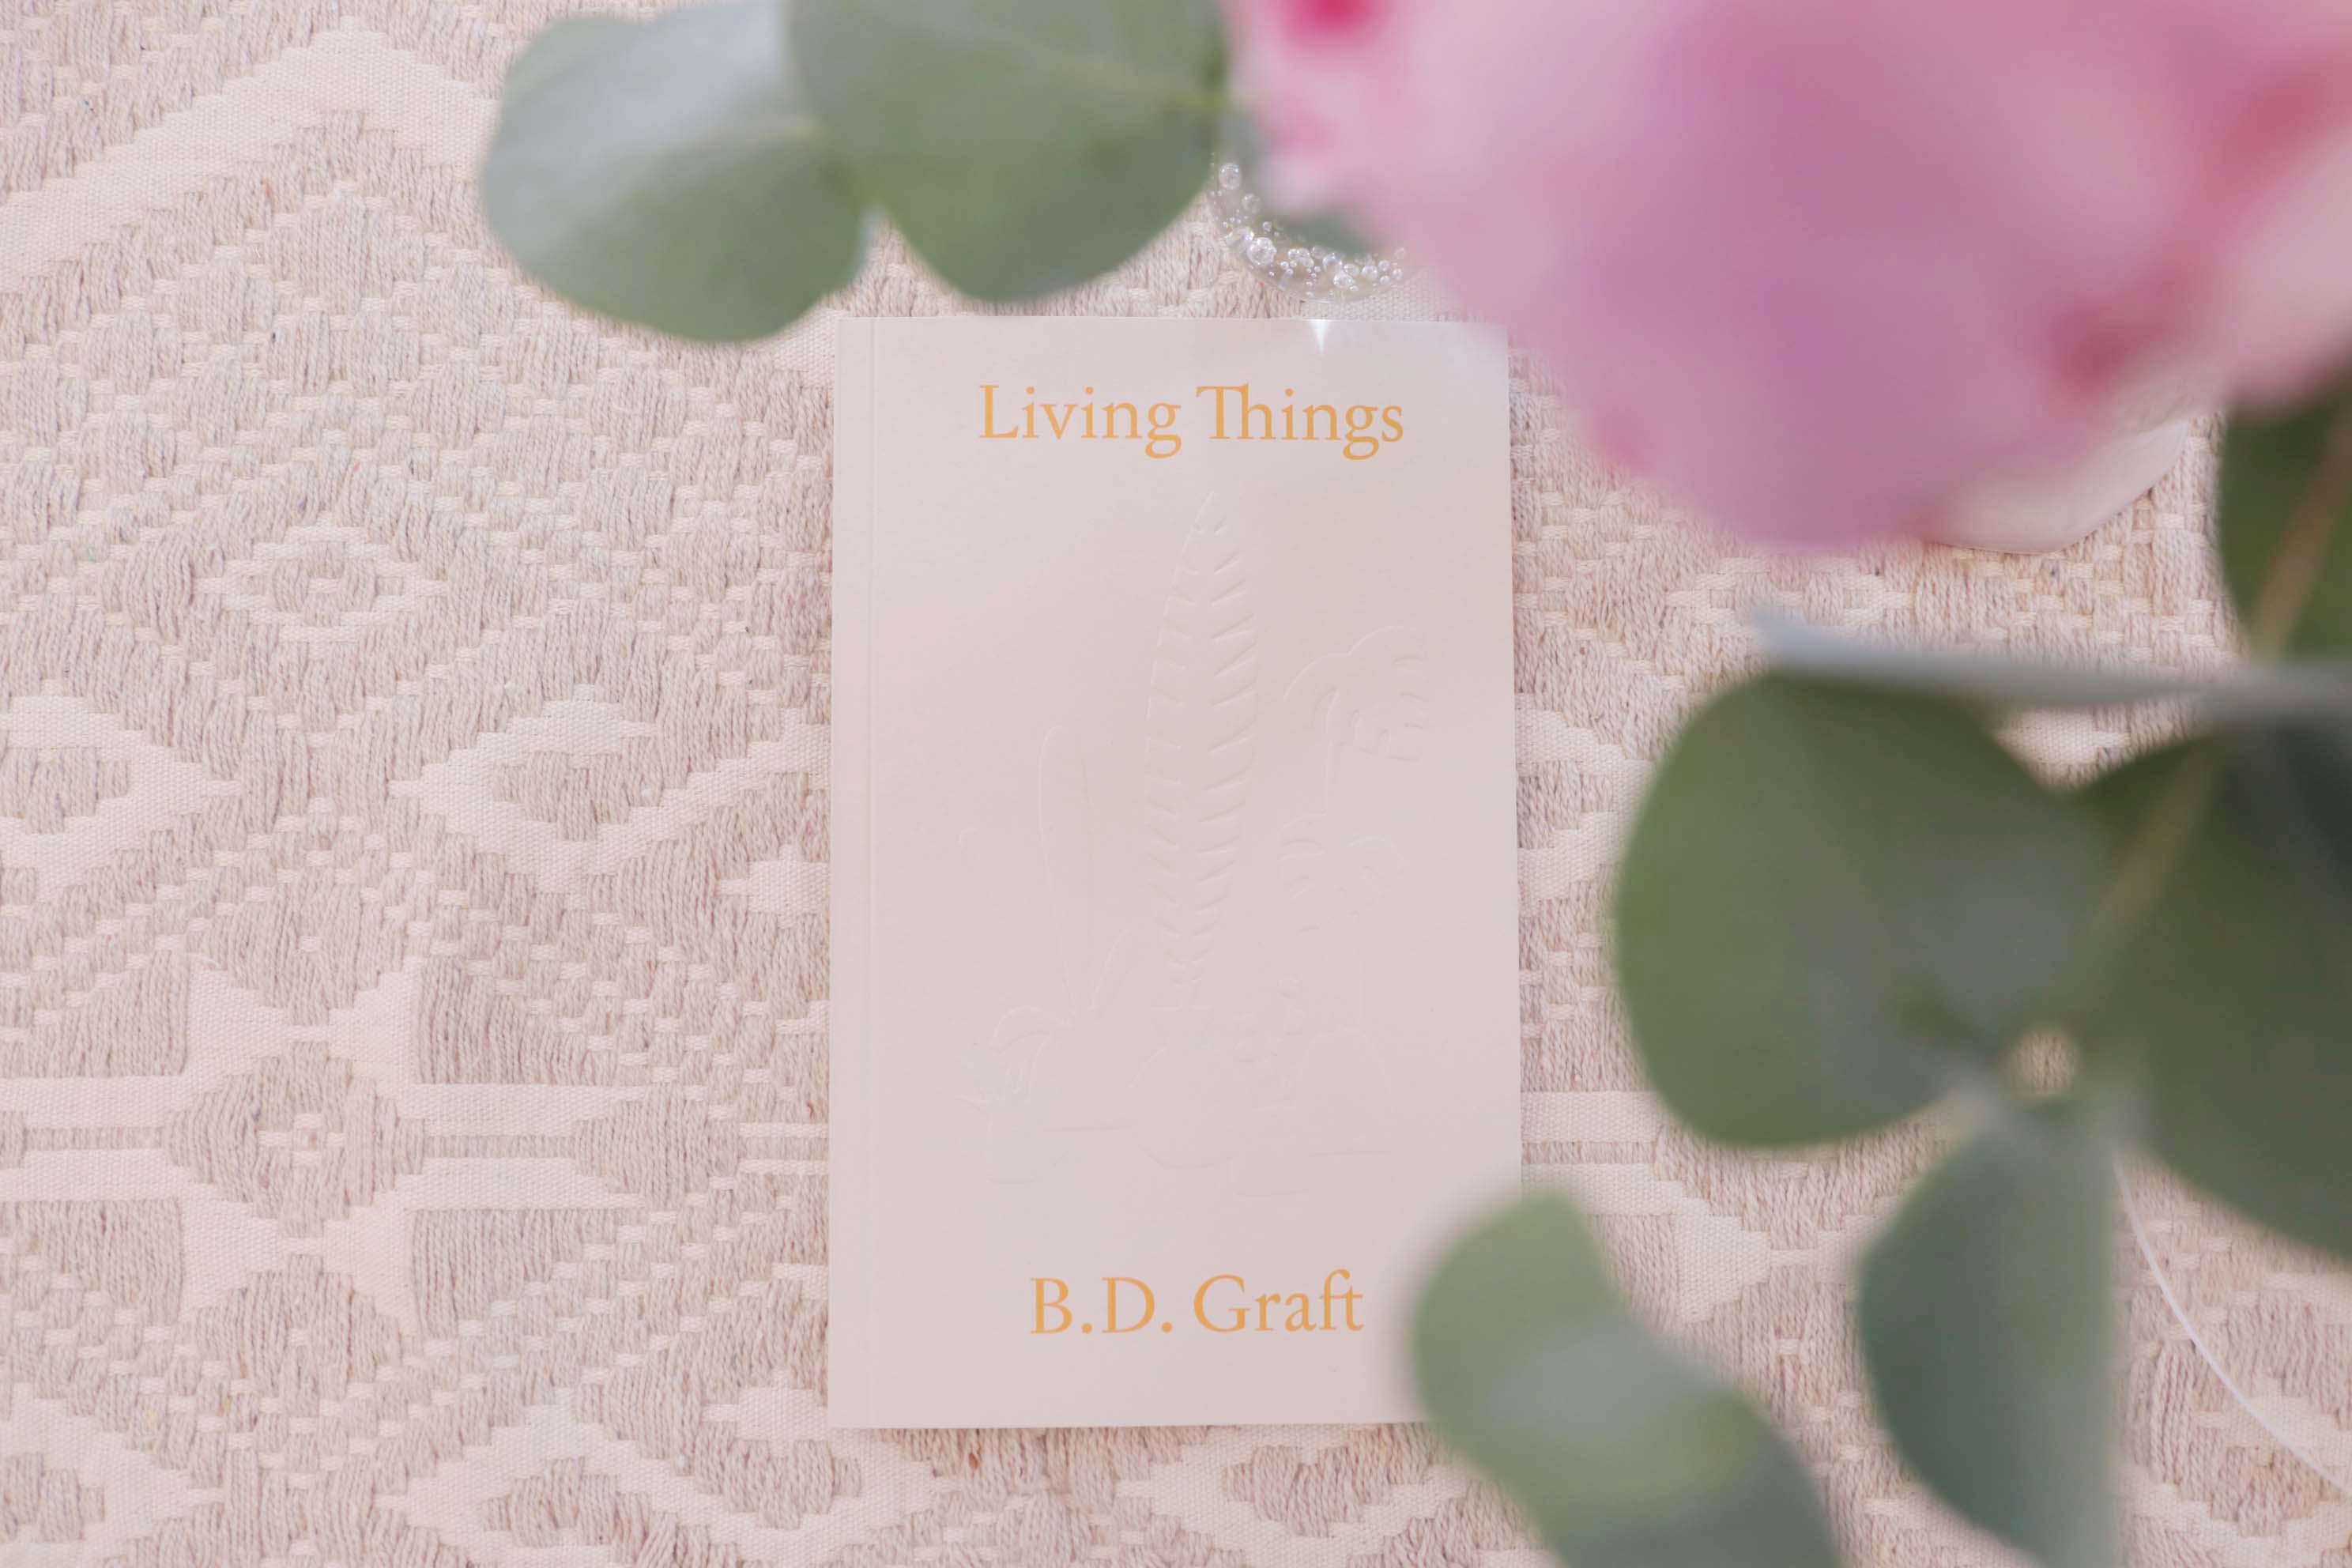 Living Things - B.D.Graft